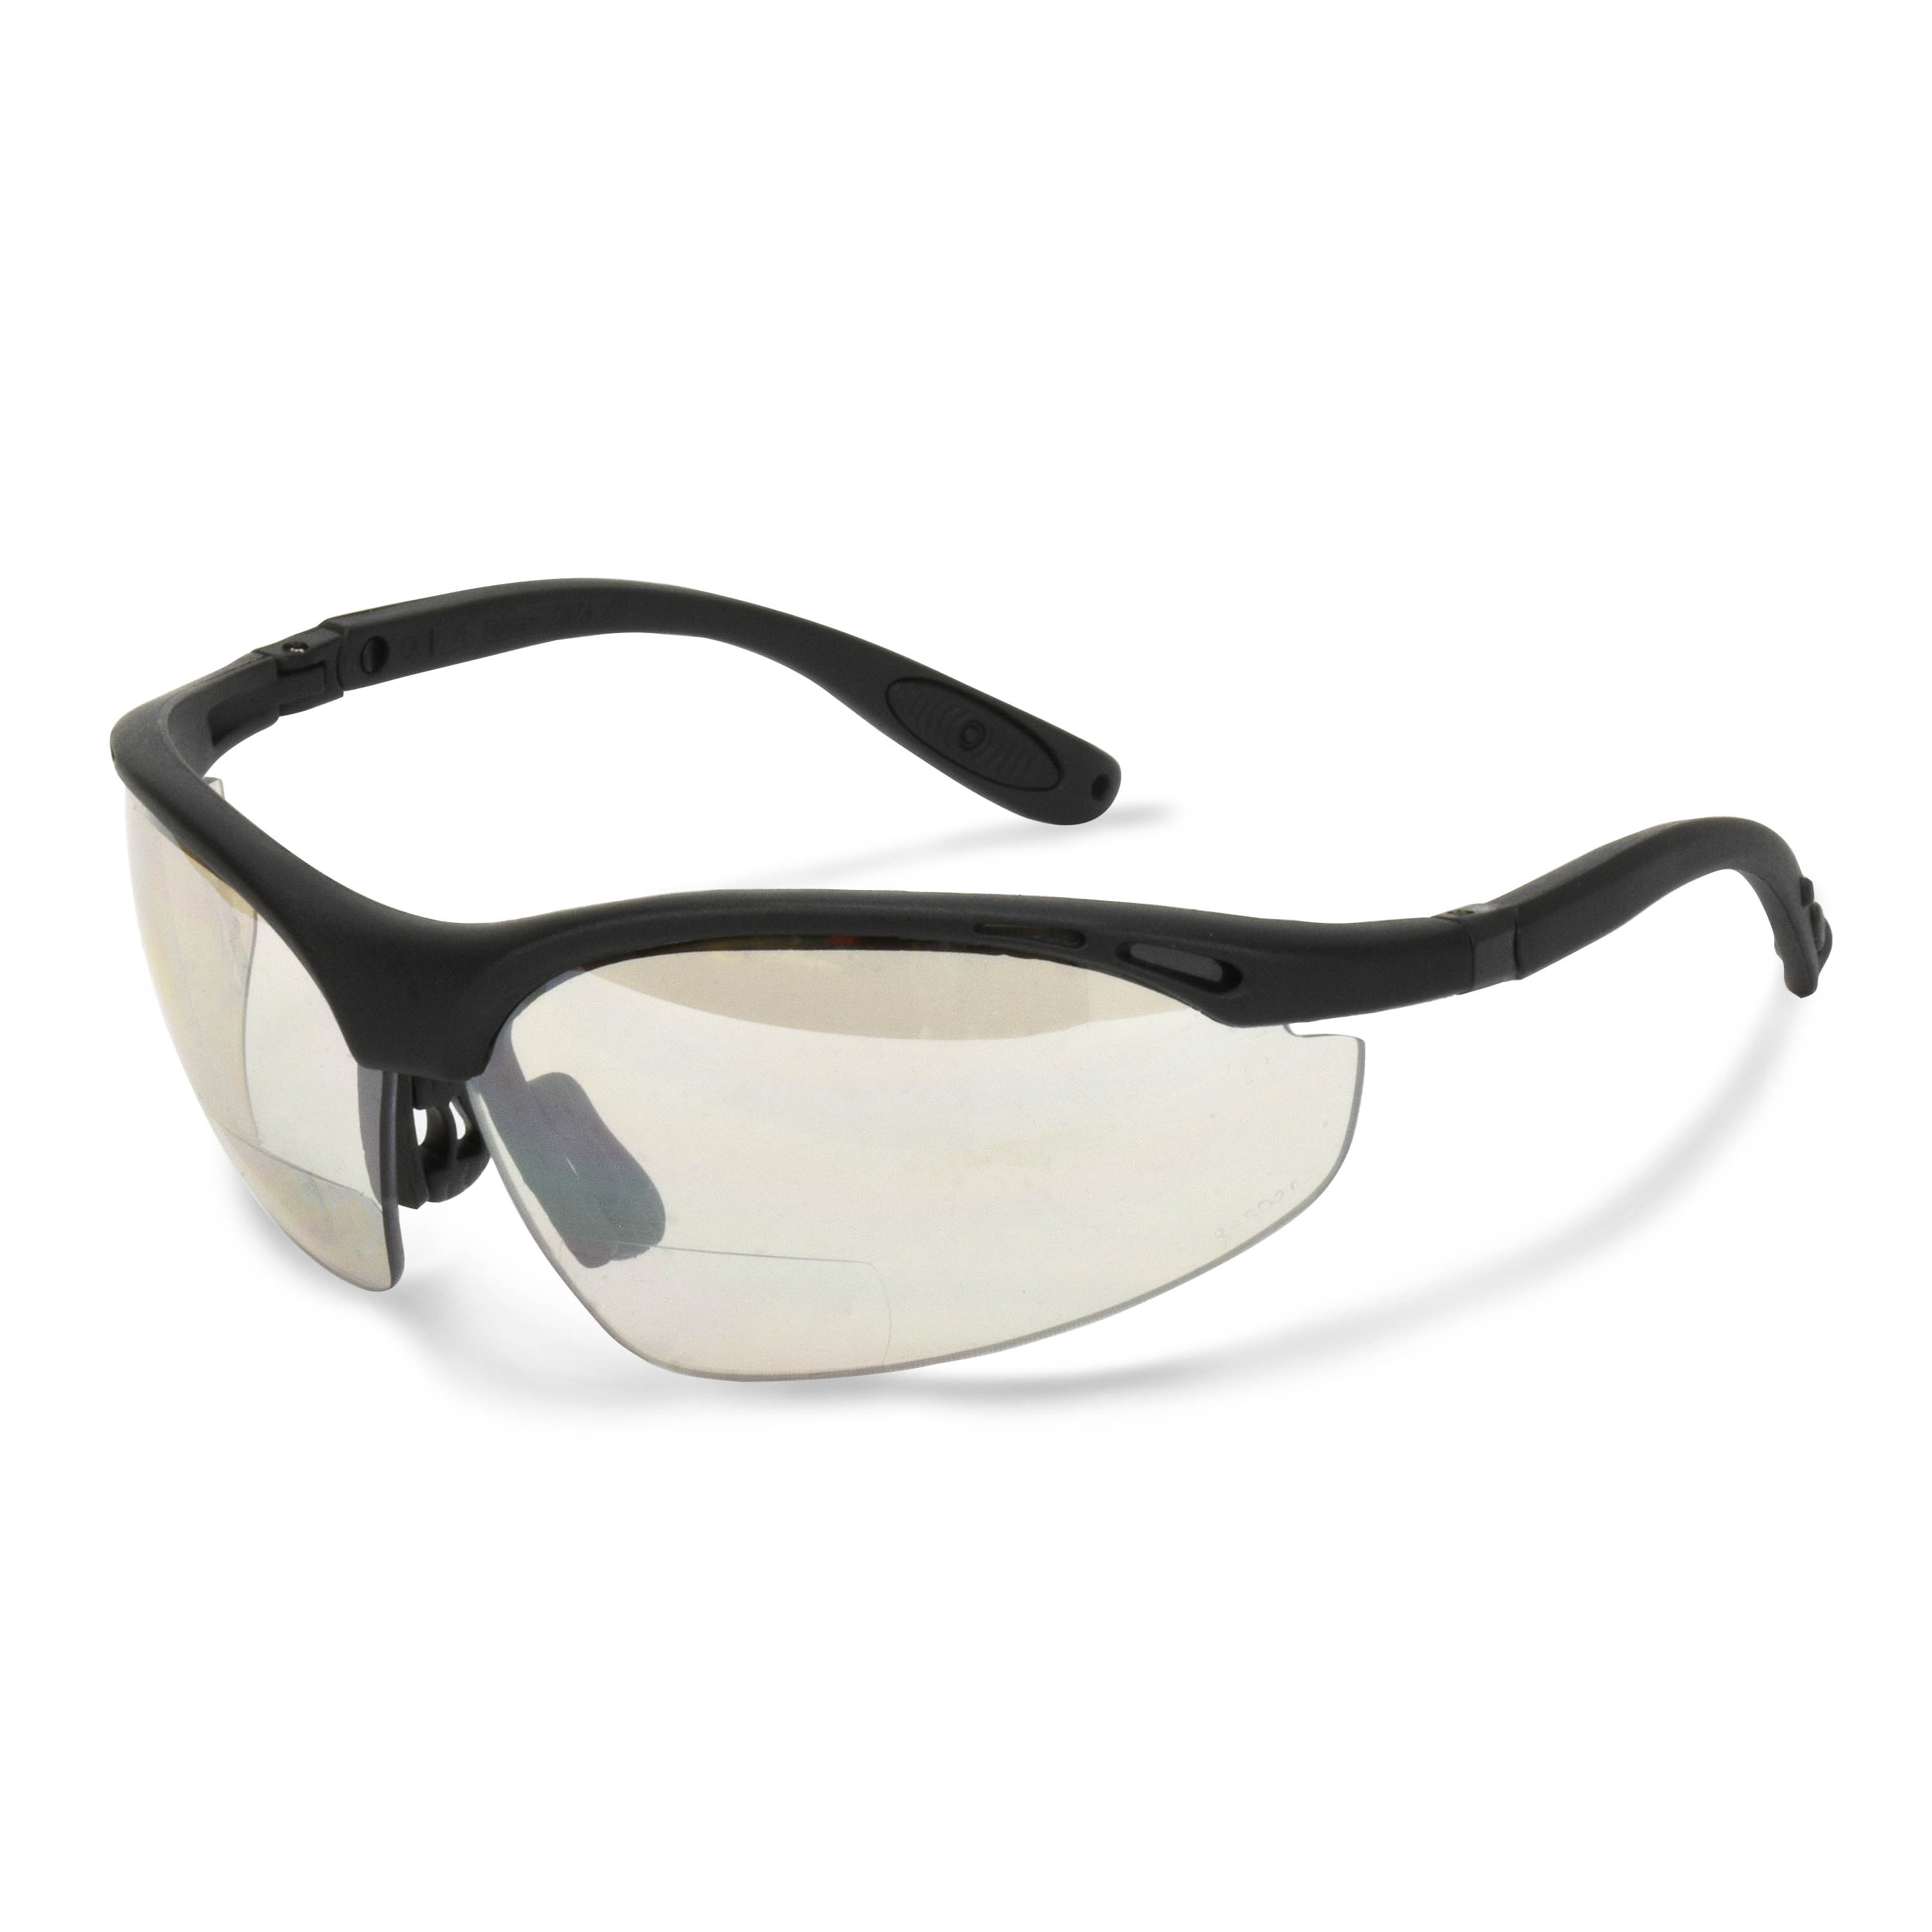 Cheaters® Bi-Focal Eyewear - Black Frame - Indoor/Outdoor Lens - 1.5 Diopter